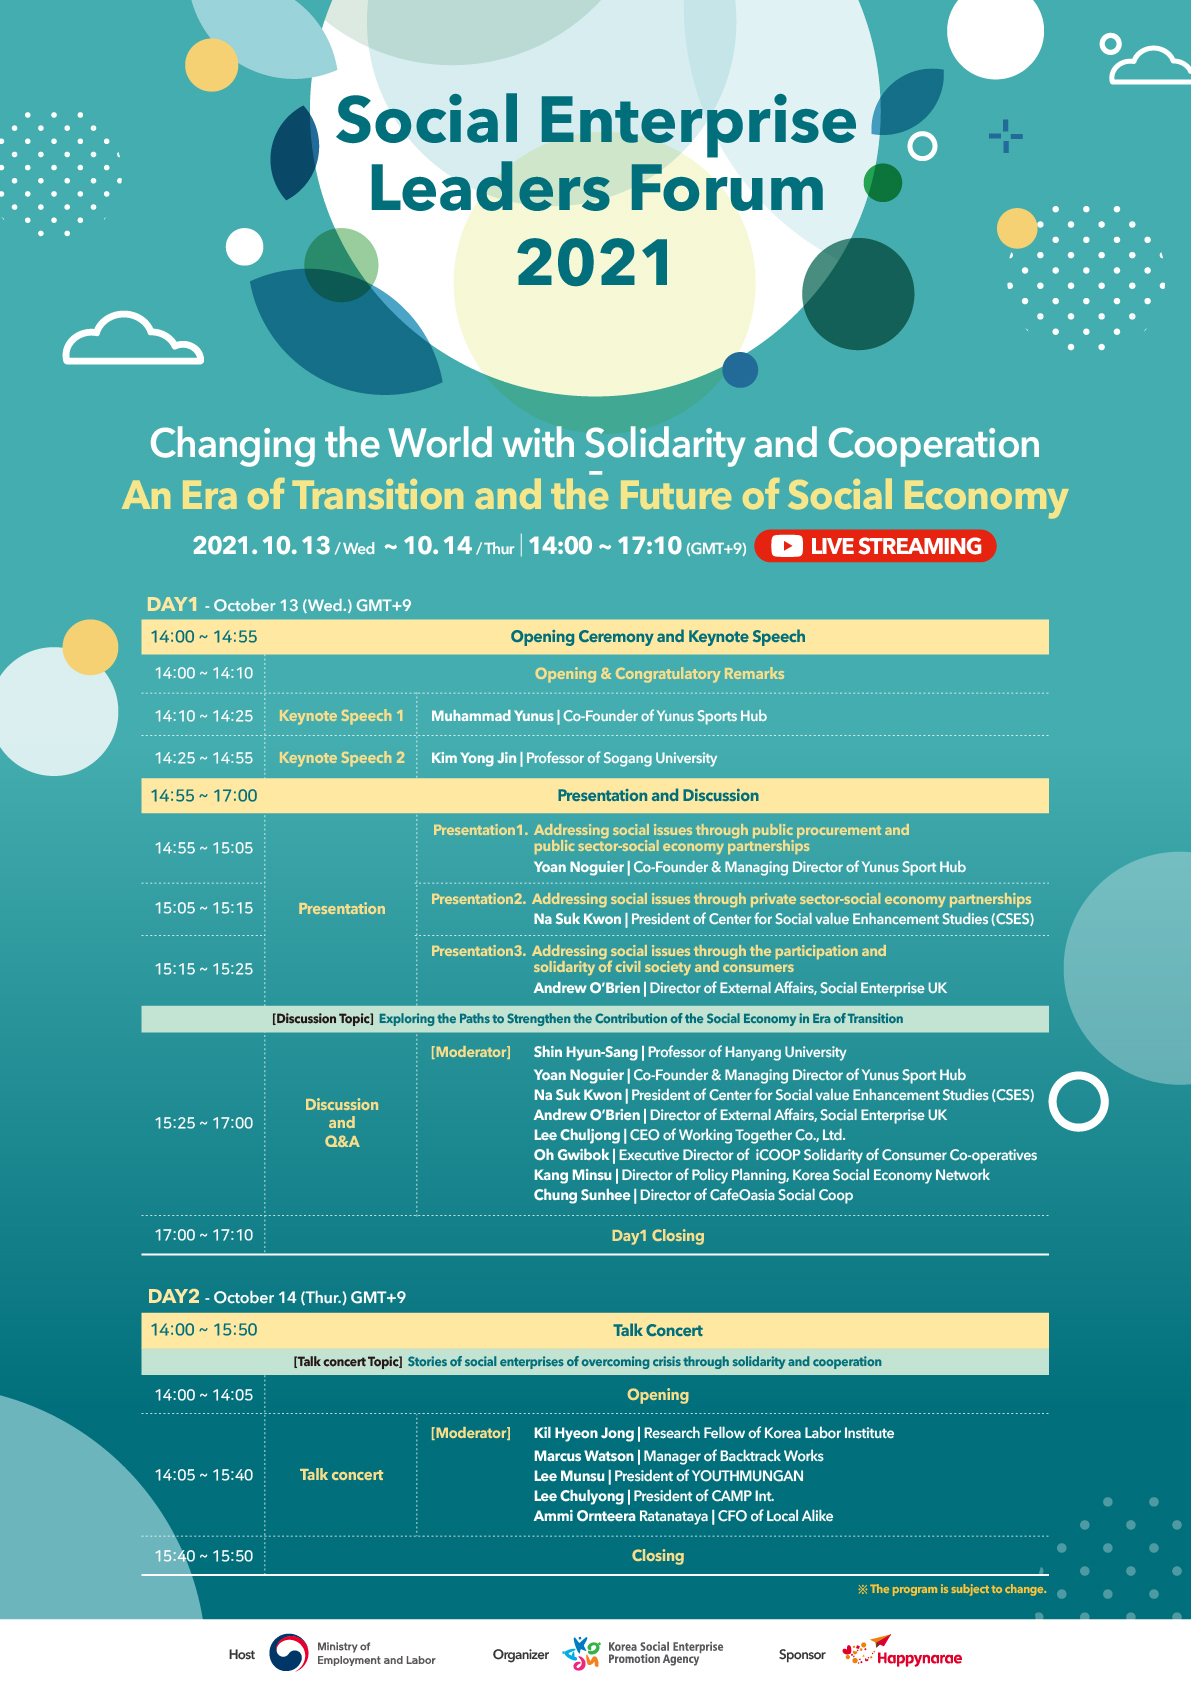 Social Enterprise Leaders Forum 2021 (Oct 13(Wed) - Oct 14(Thur), 2021)